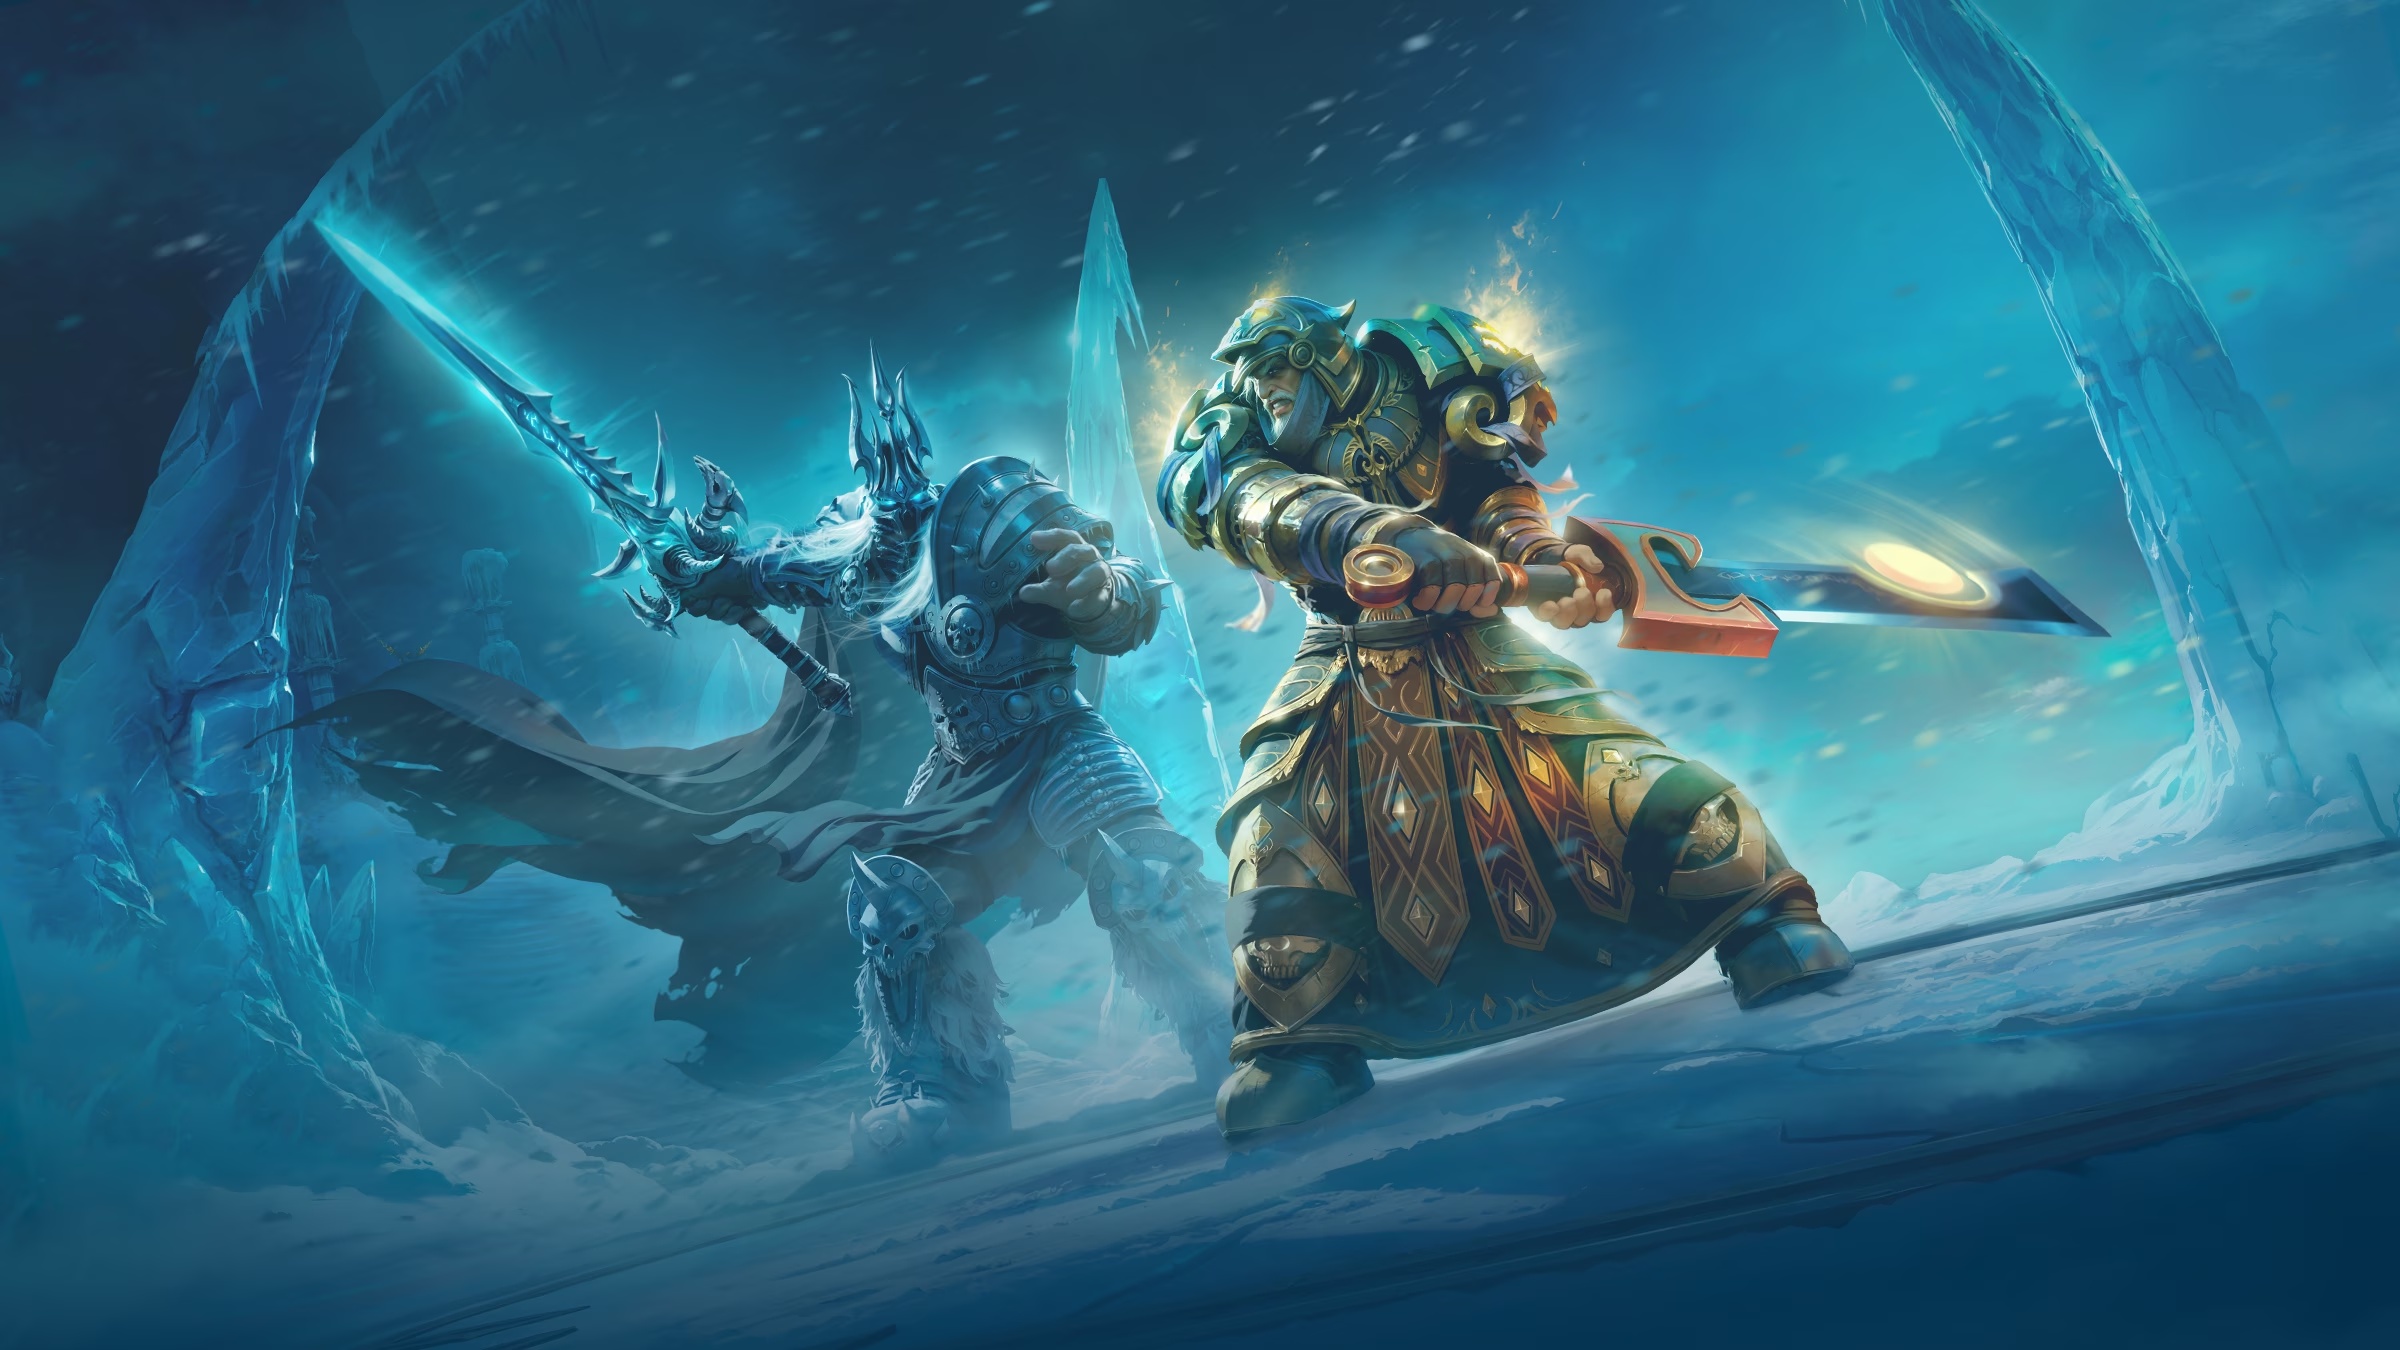 icecrown citadel release date